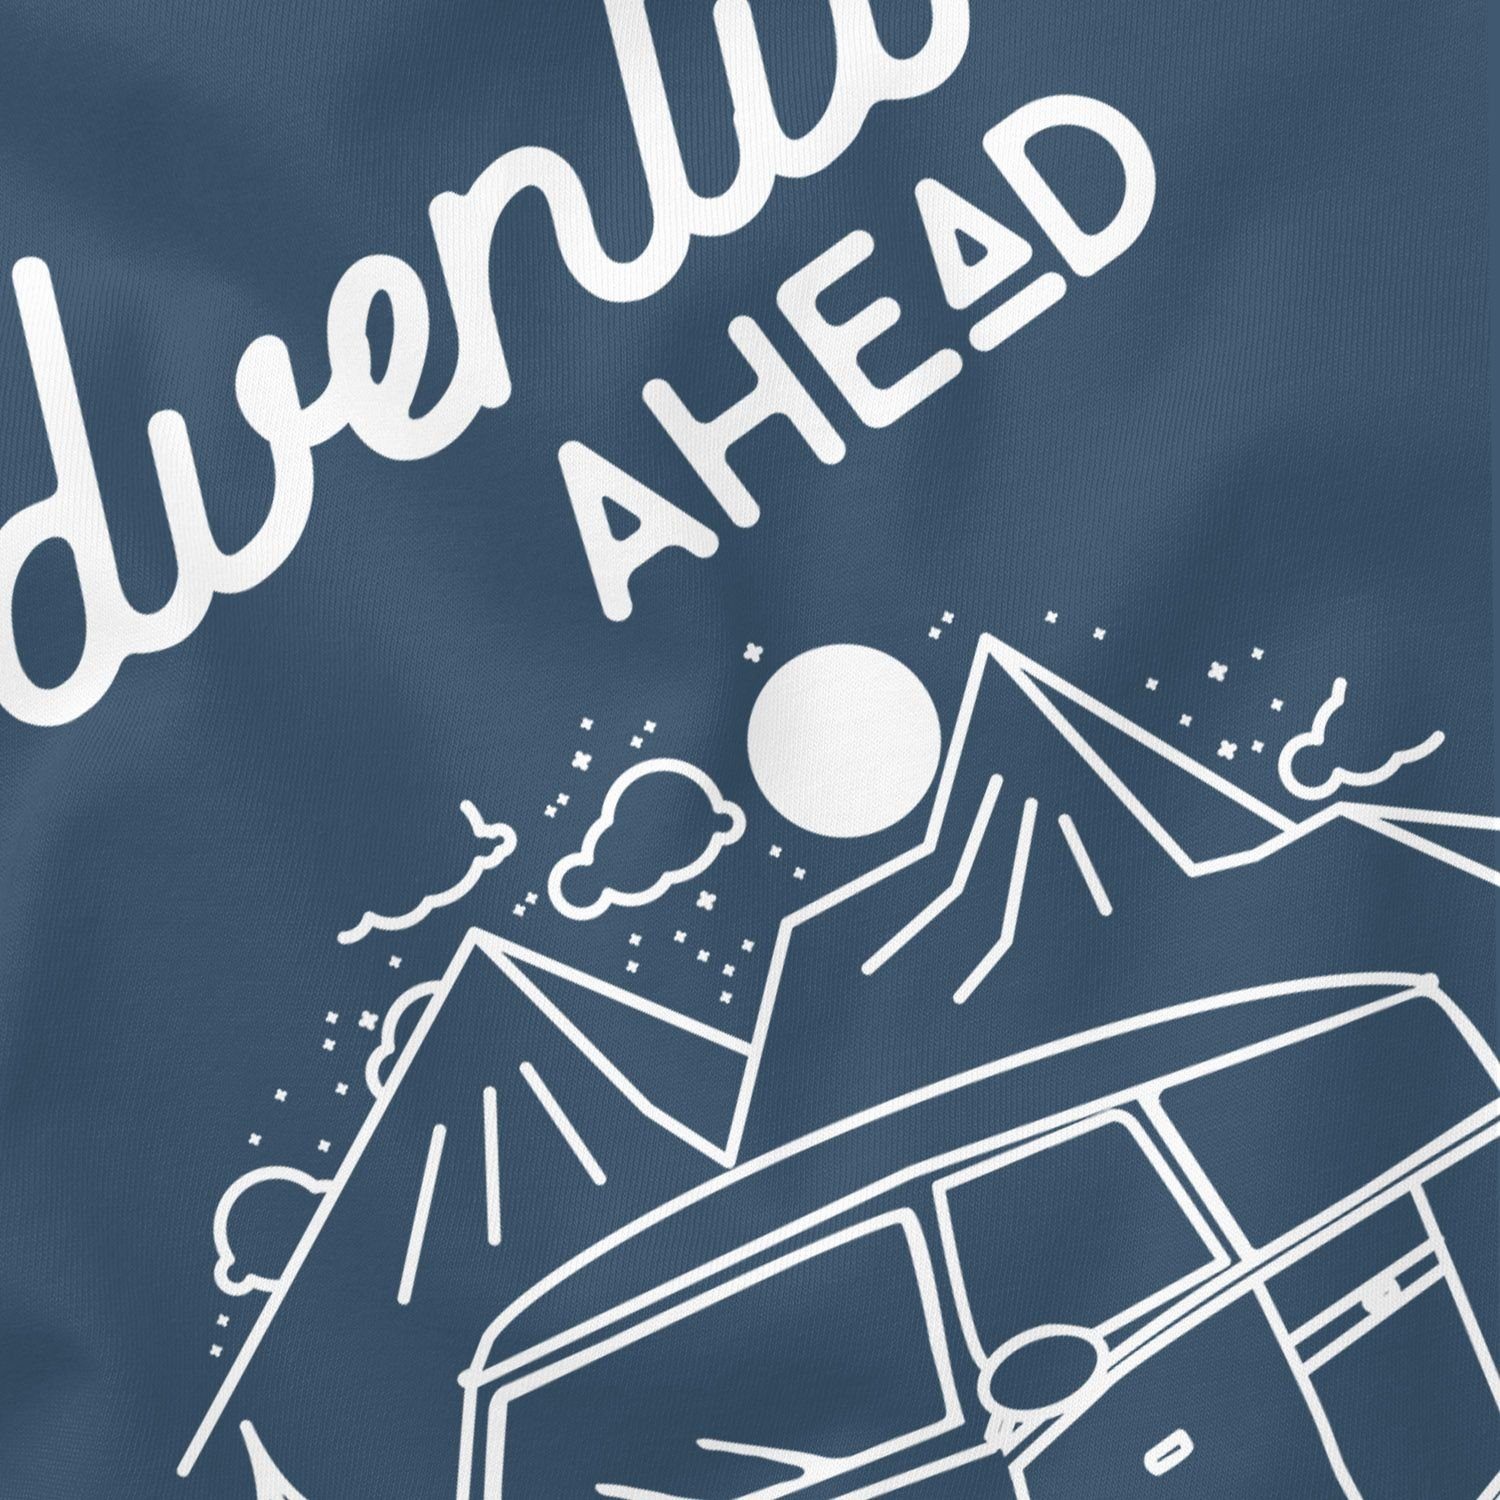 MoonWorks Print-Shirt Herren Retro Abenteuer T-Shirt mit Print Bus blau Moonworks® Adventures Ahead